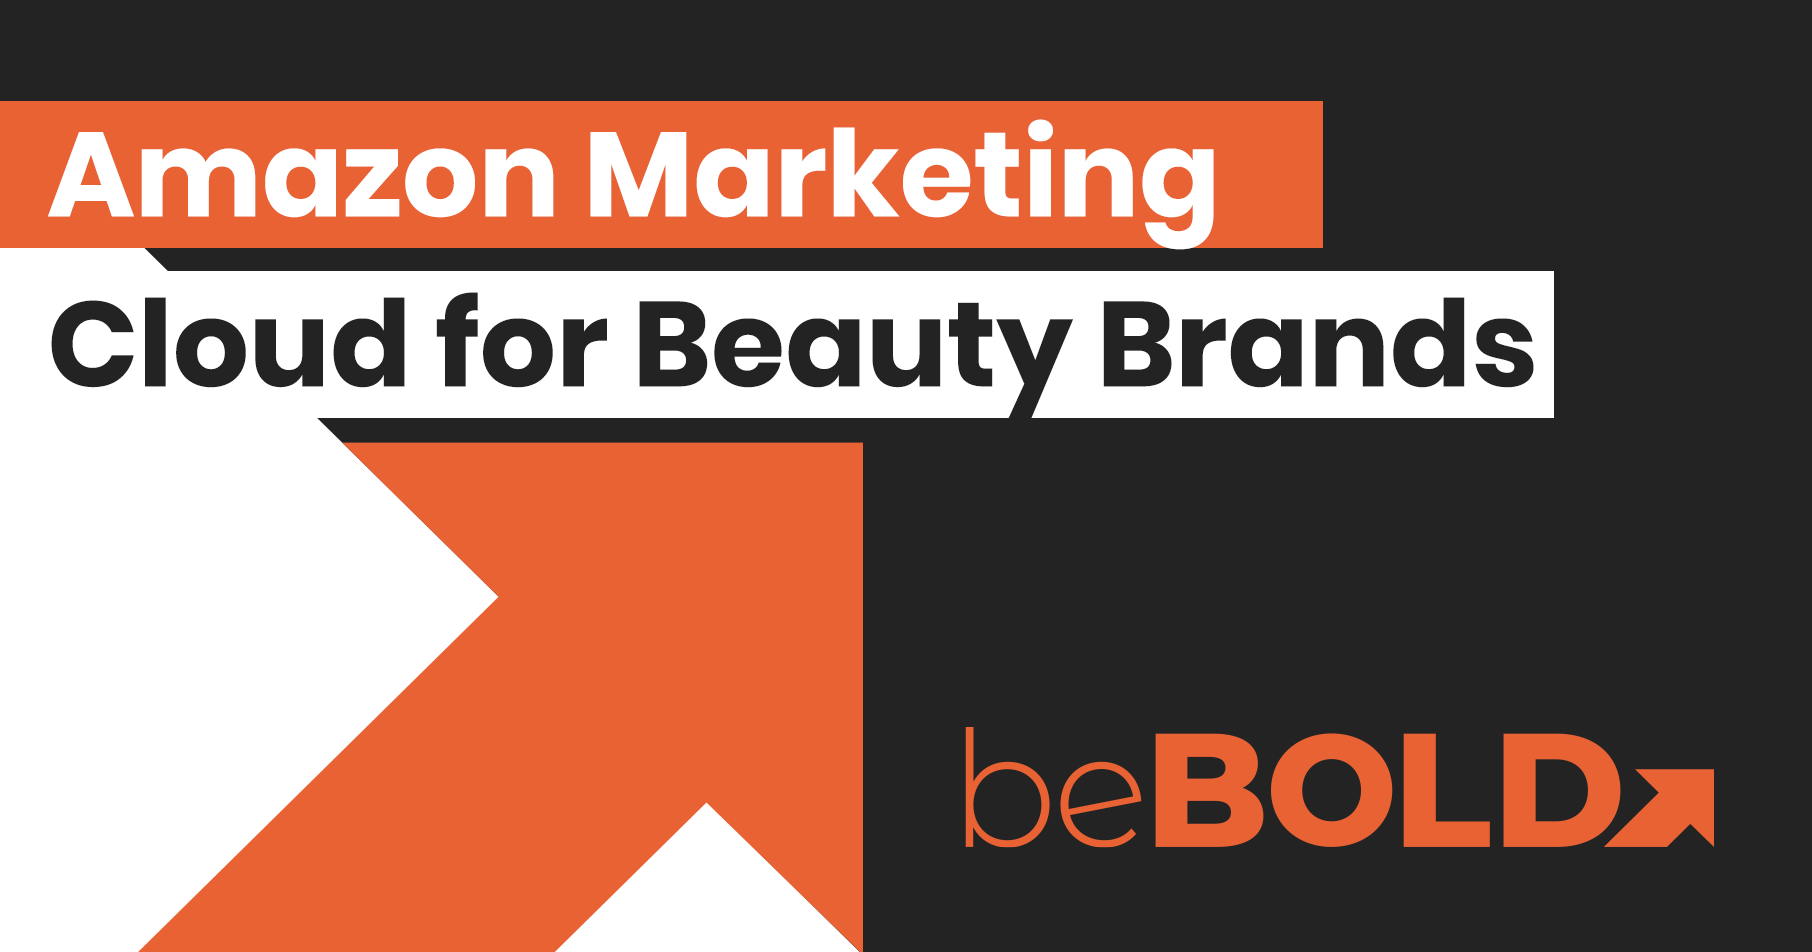 Amazon Marketing Cloud for Beauty Brands